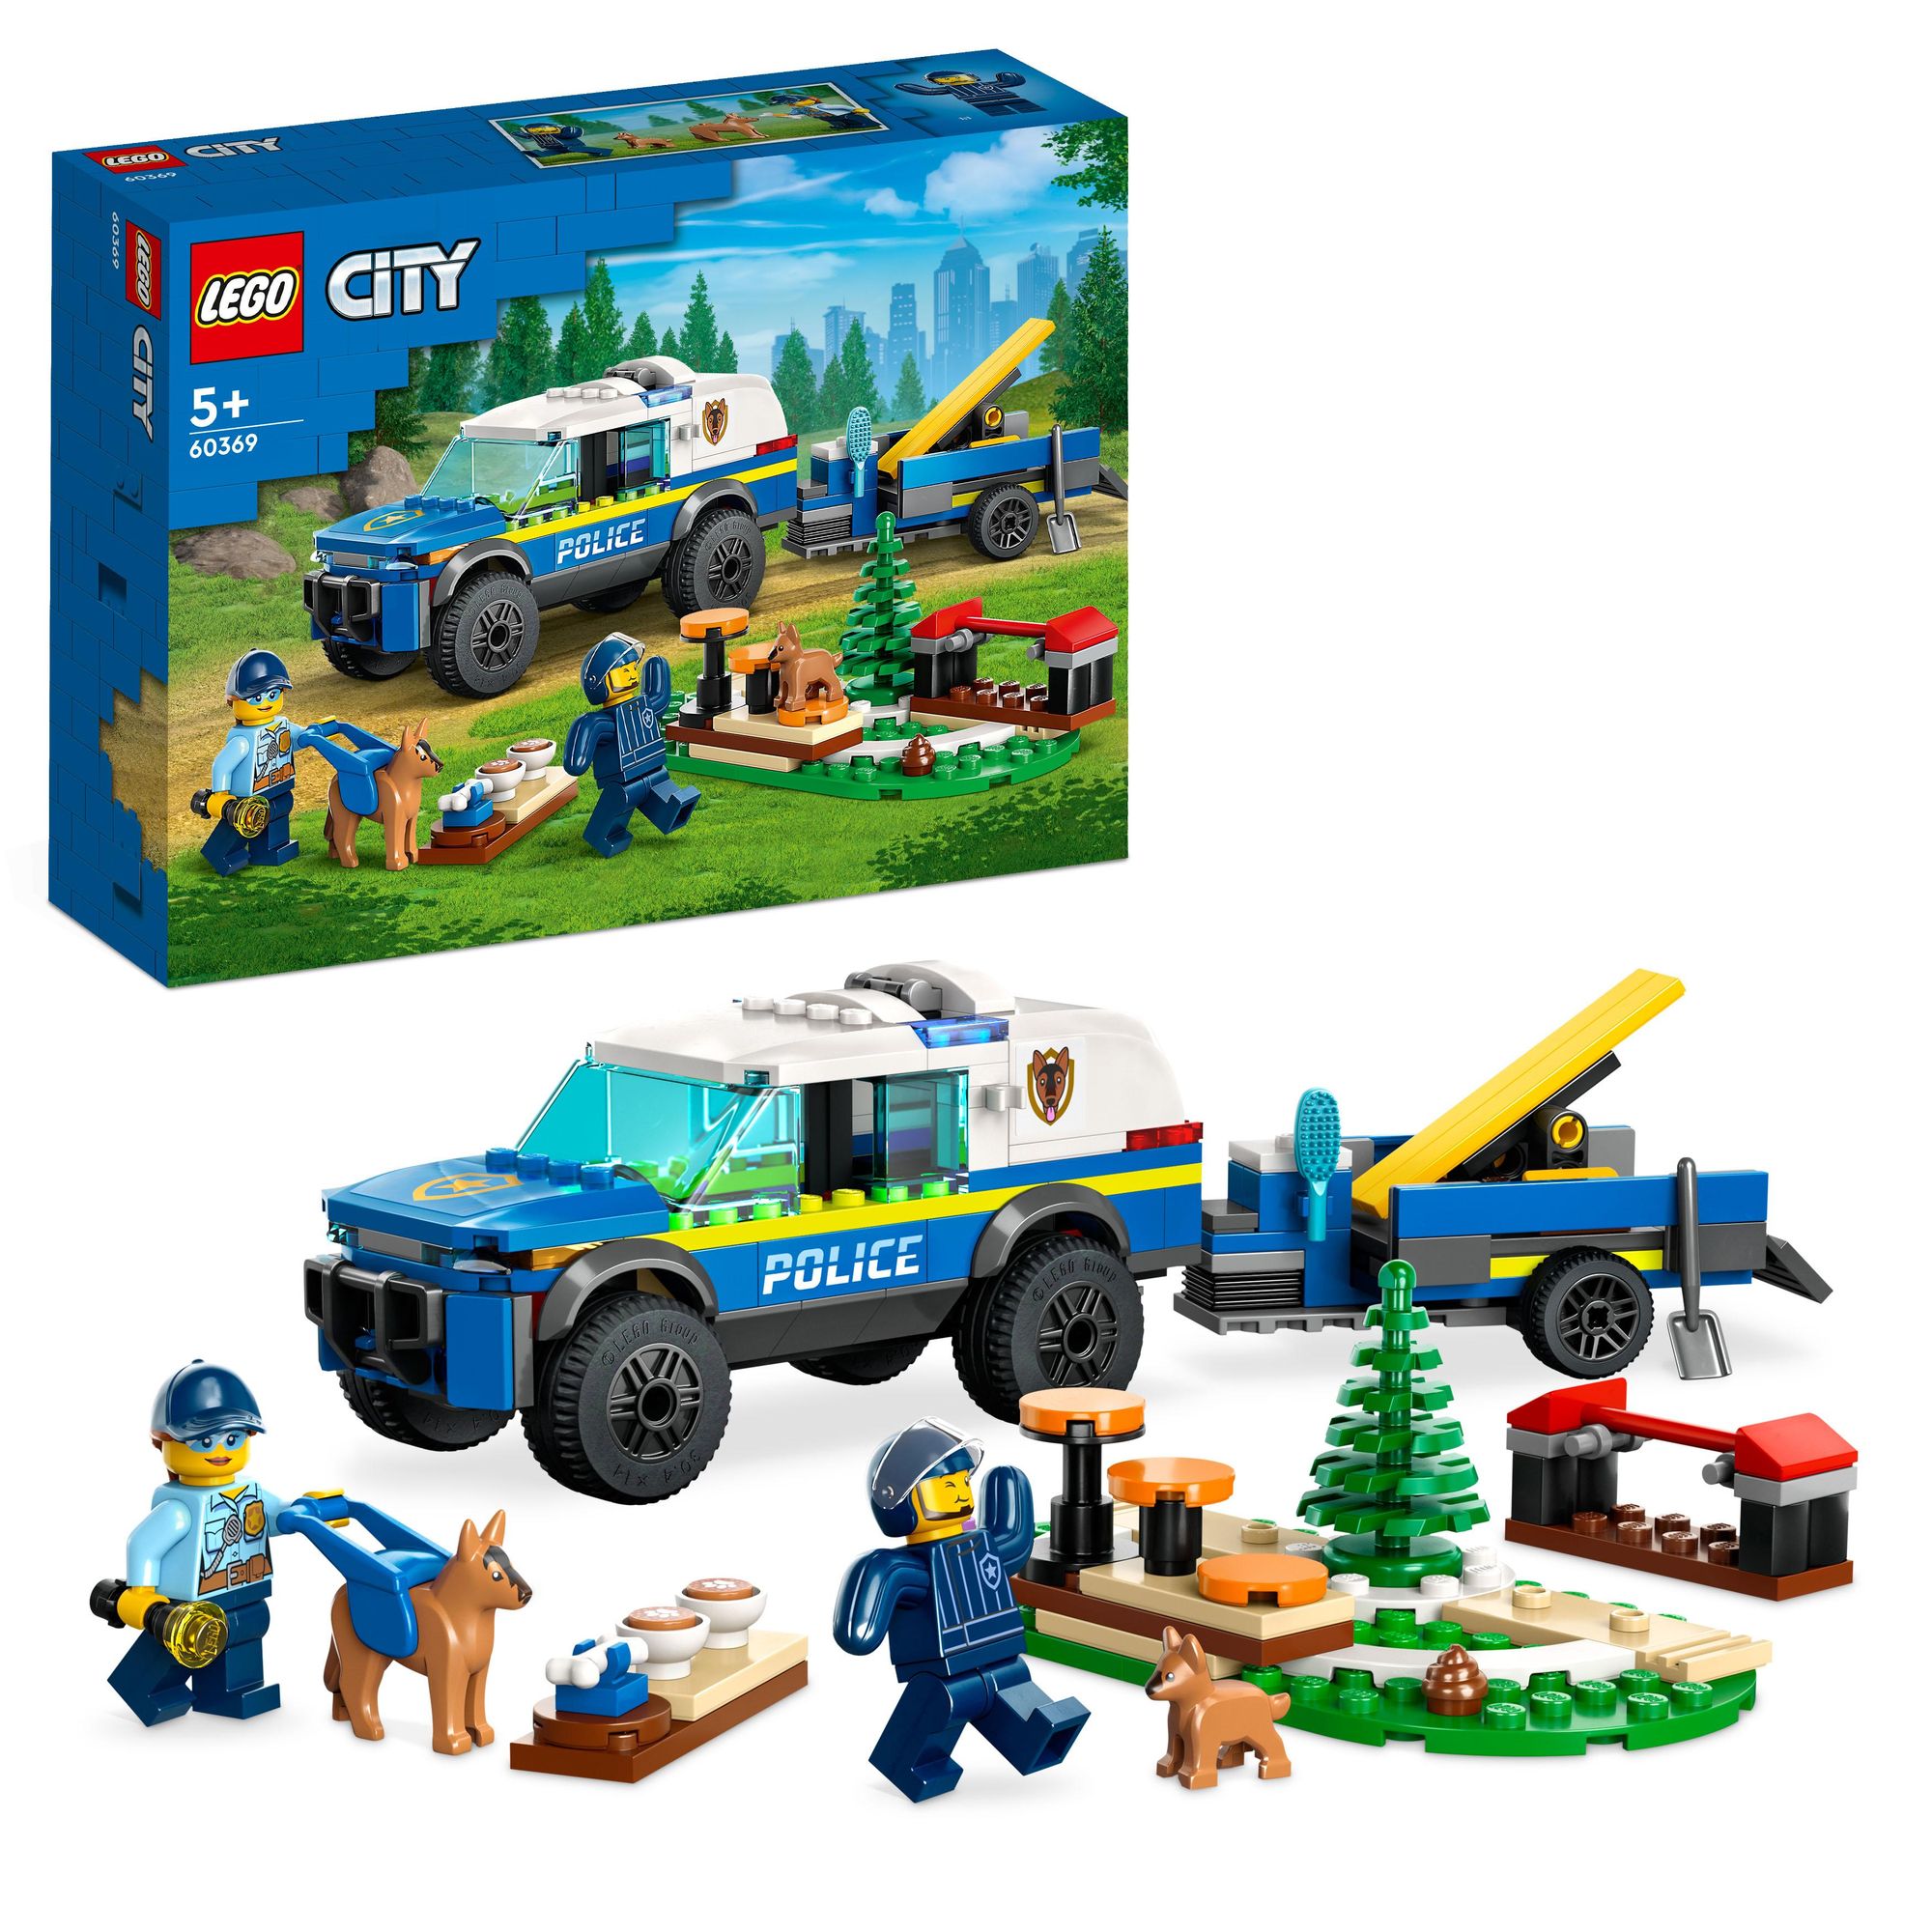 LEGO City 60369 Mobiles Polizeihunde-Training, Spielzeug-Auto' kaufen -  Spielwaren